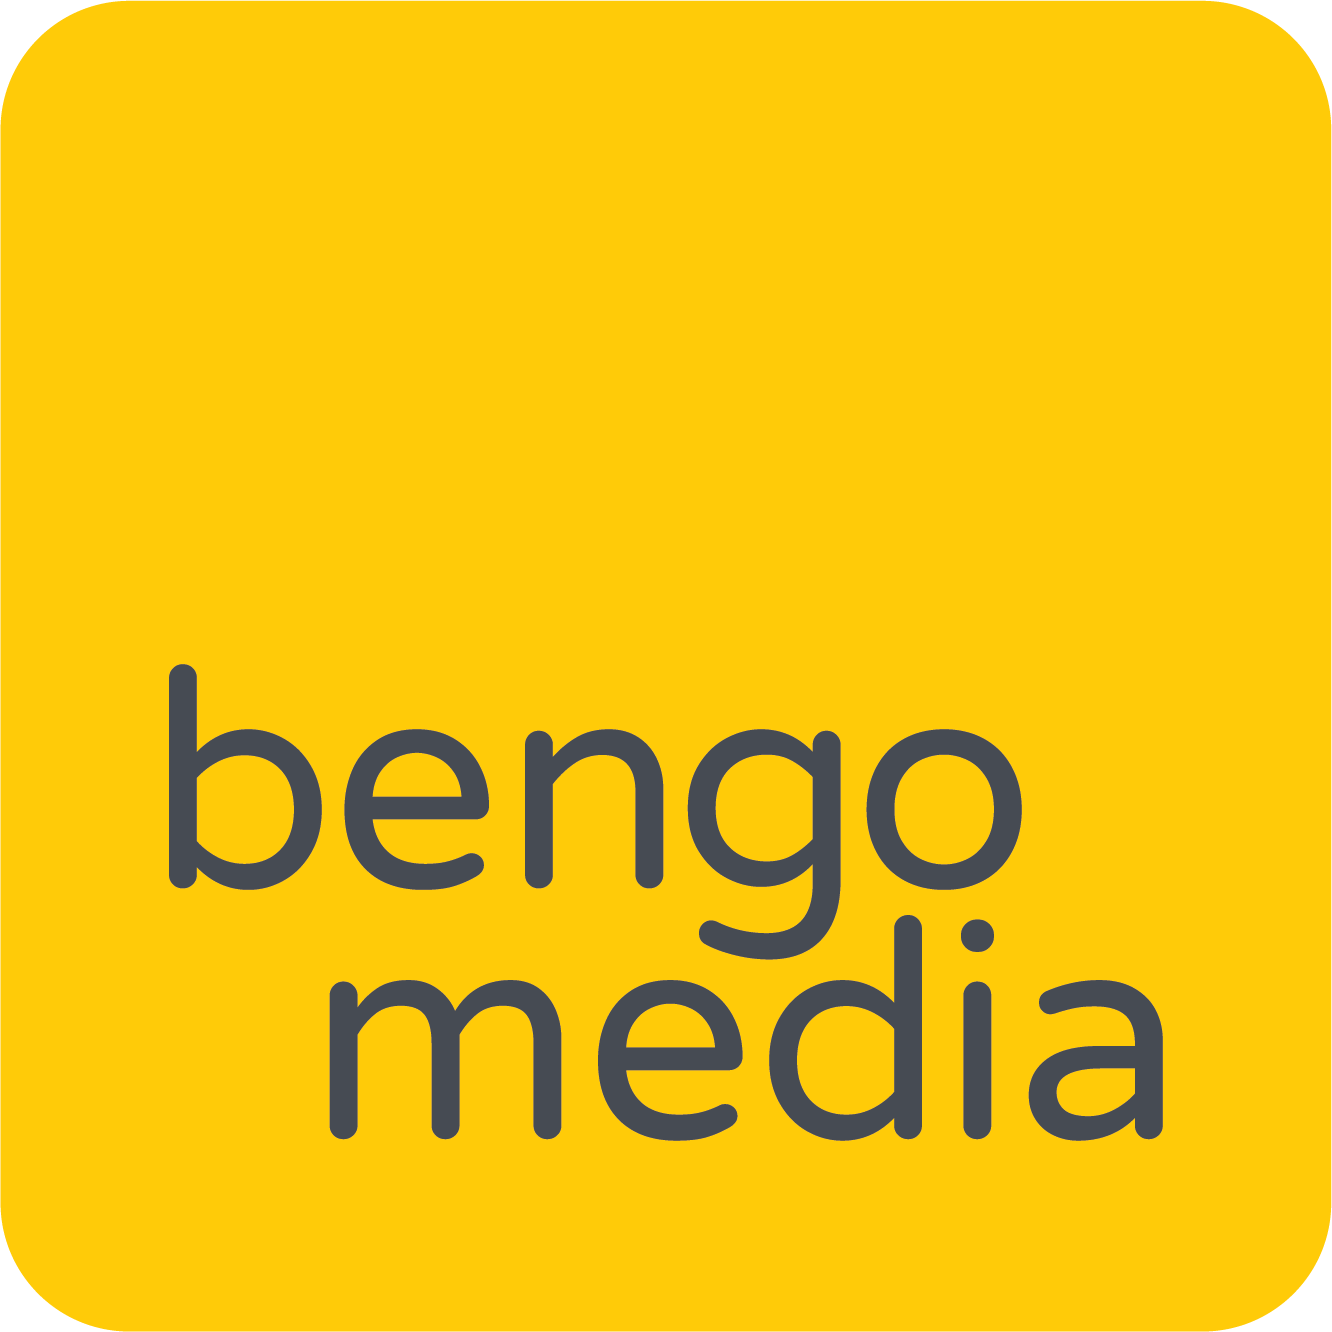 Bengo Media Logo grey on yellow